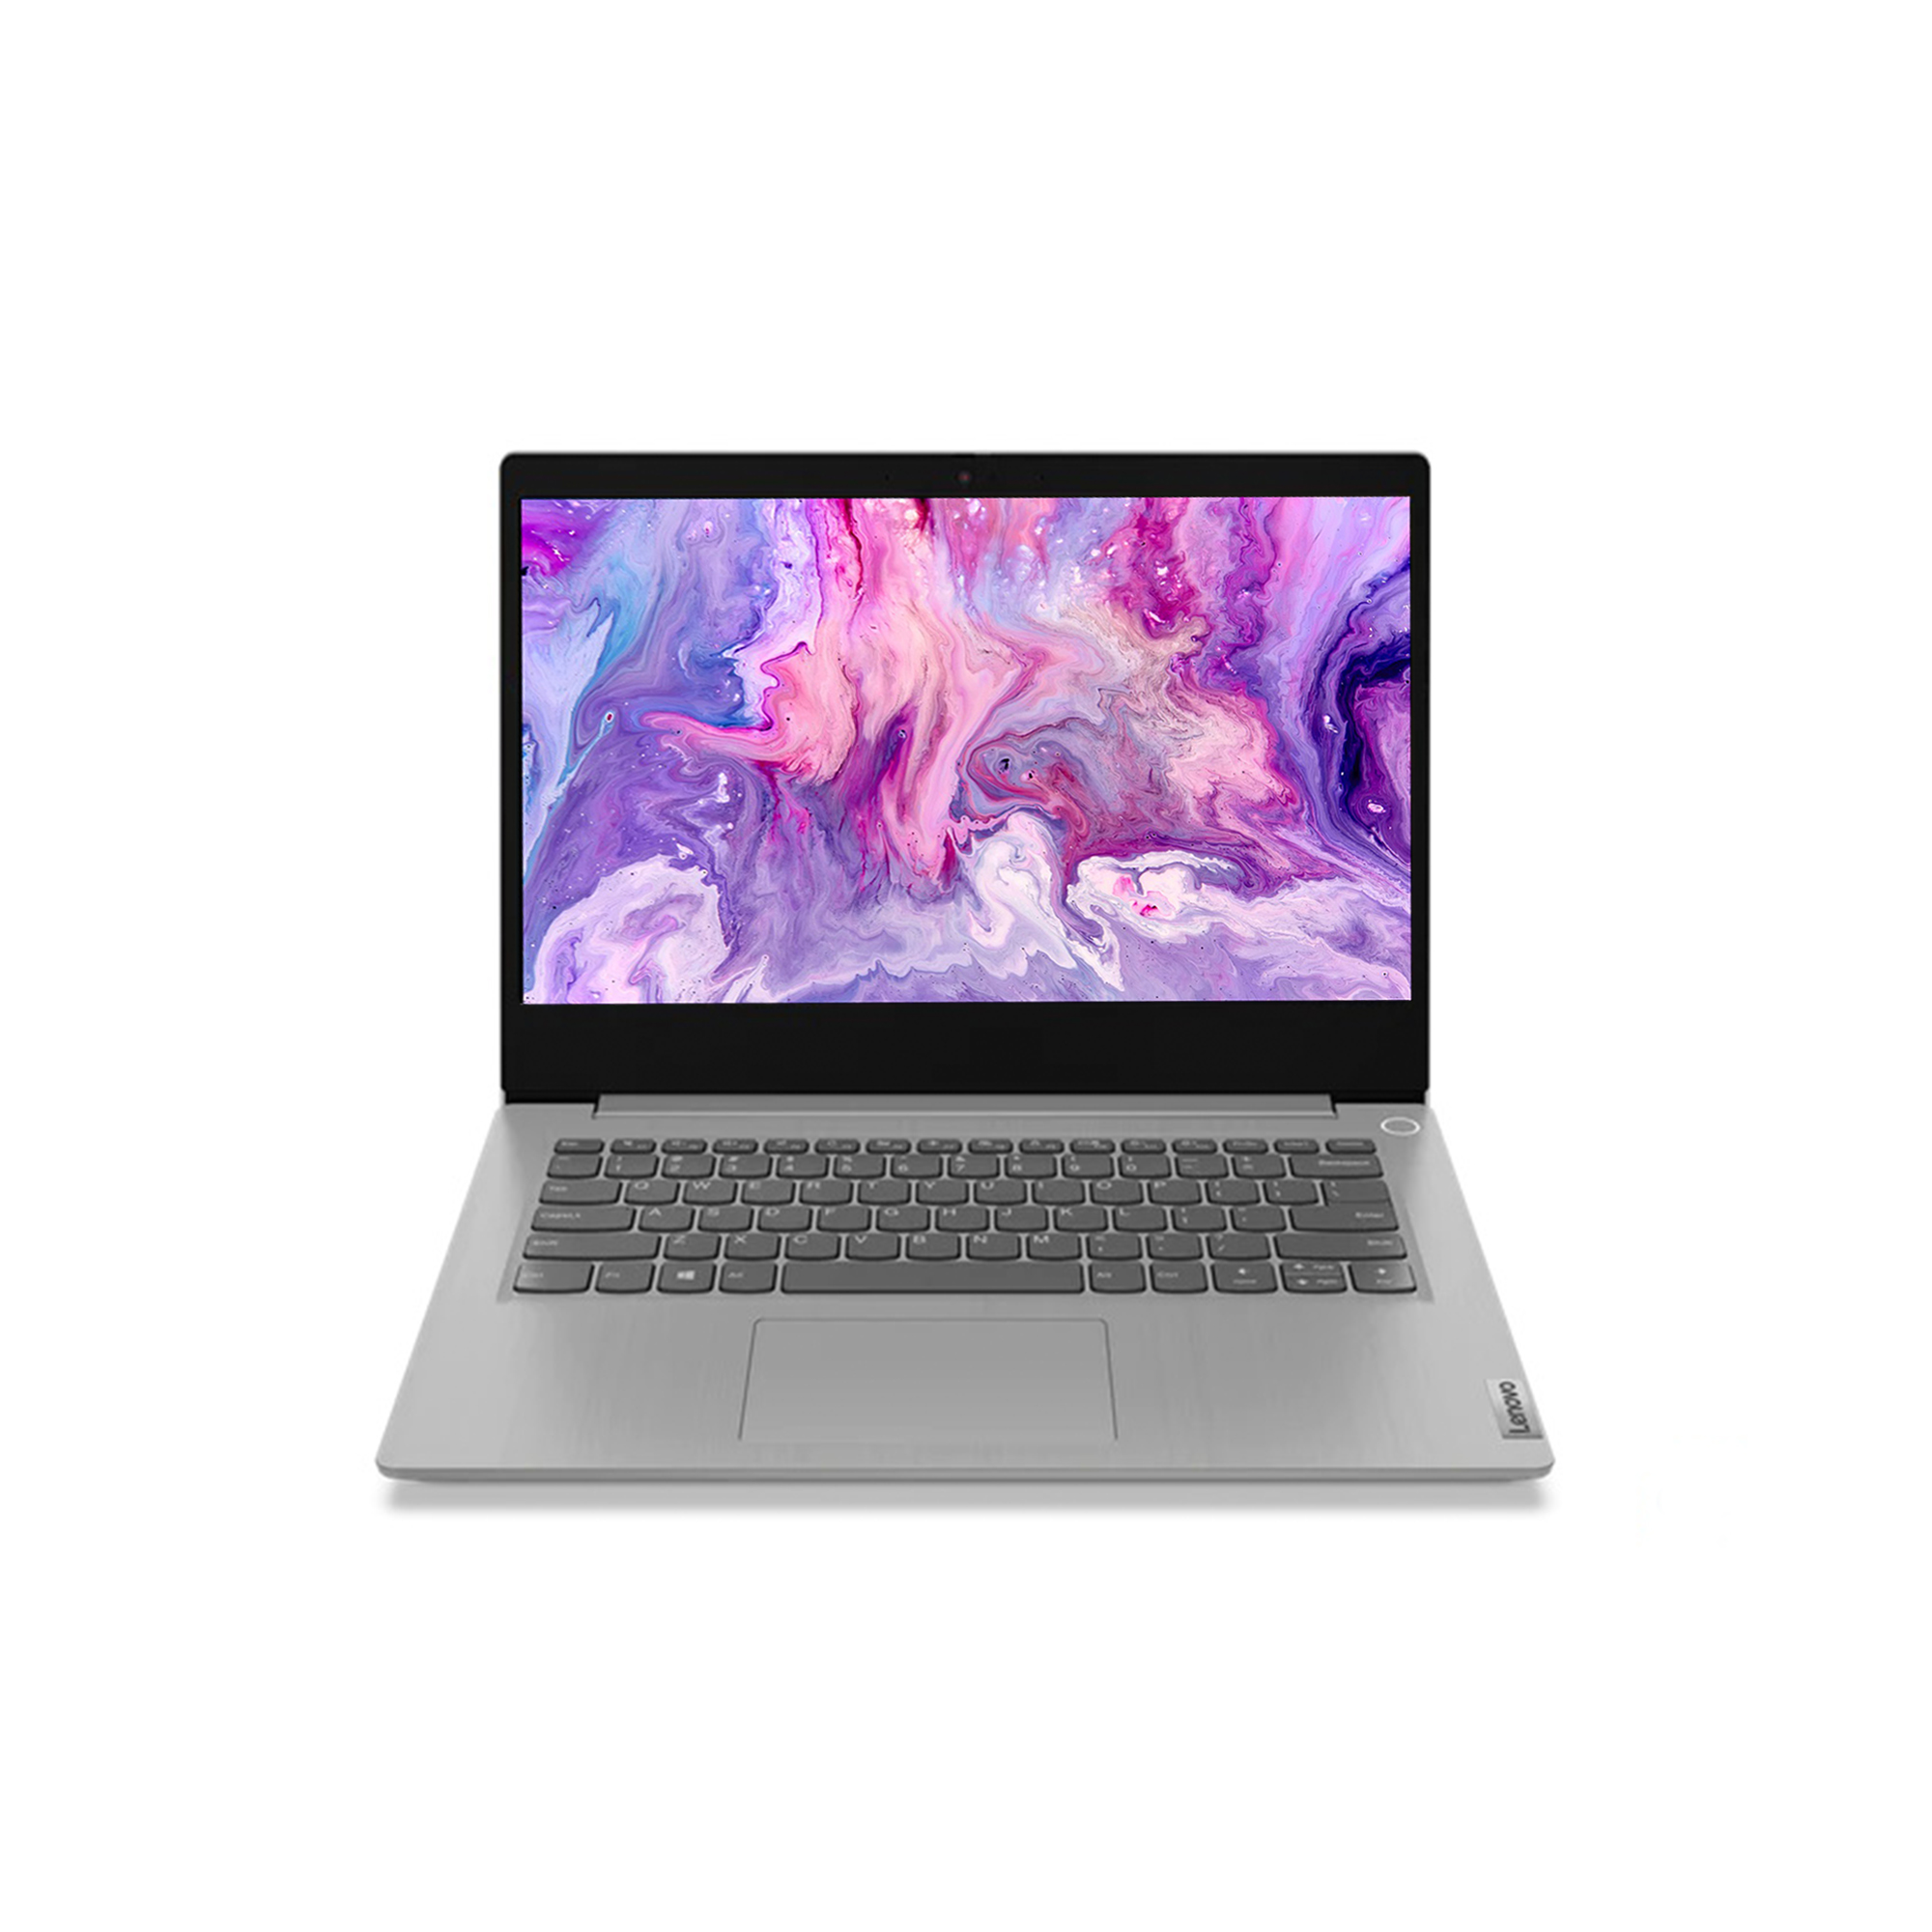 ASUS VivoBook 14 FHD Laptop 2022 Newest, Intel Core i3-1115G4 Up to 4.1GHz  (Beat i5-1035G4), 12GB RAM, 512GB SSD, Intel UHD Graphics, Windows 10 + 3